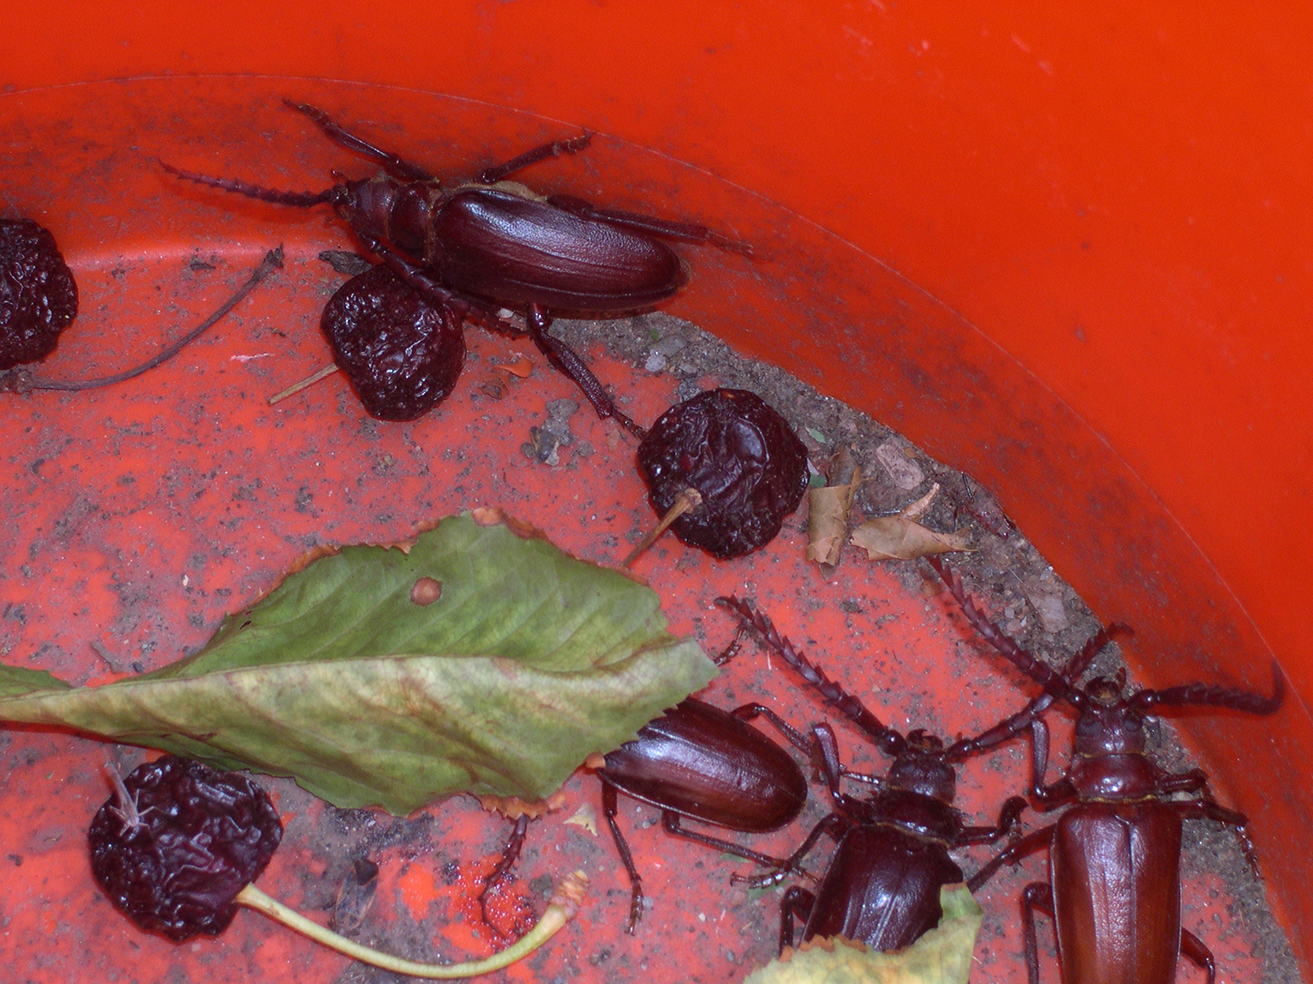 Prionus males caught in bucket trap.